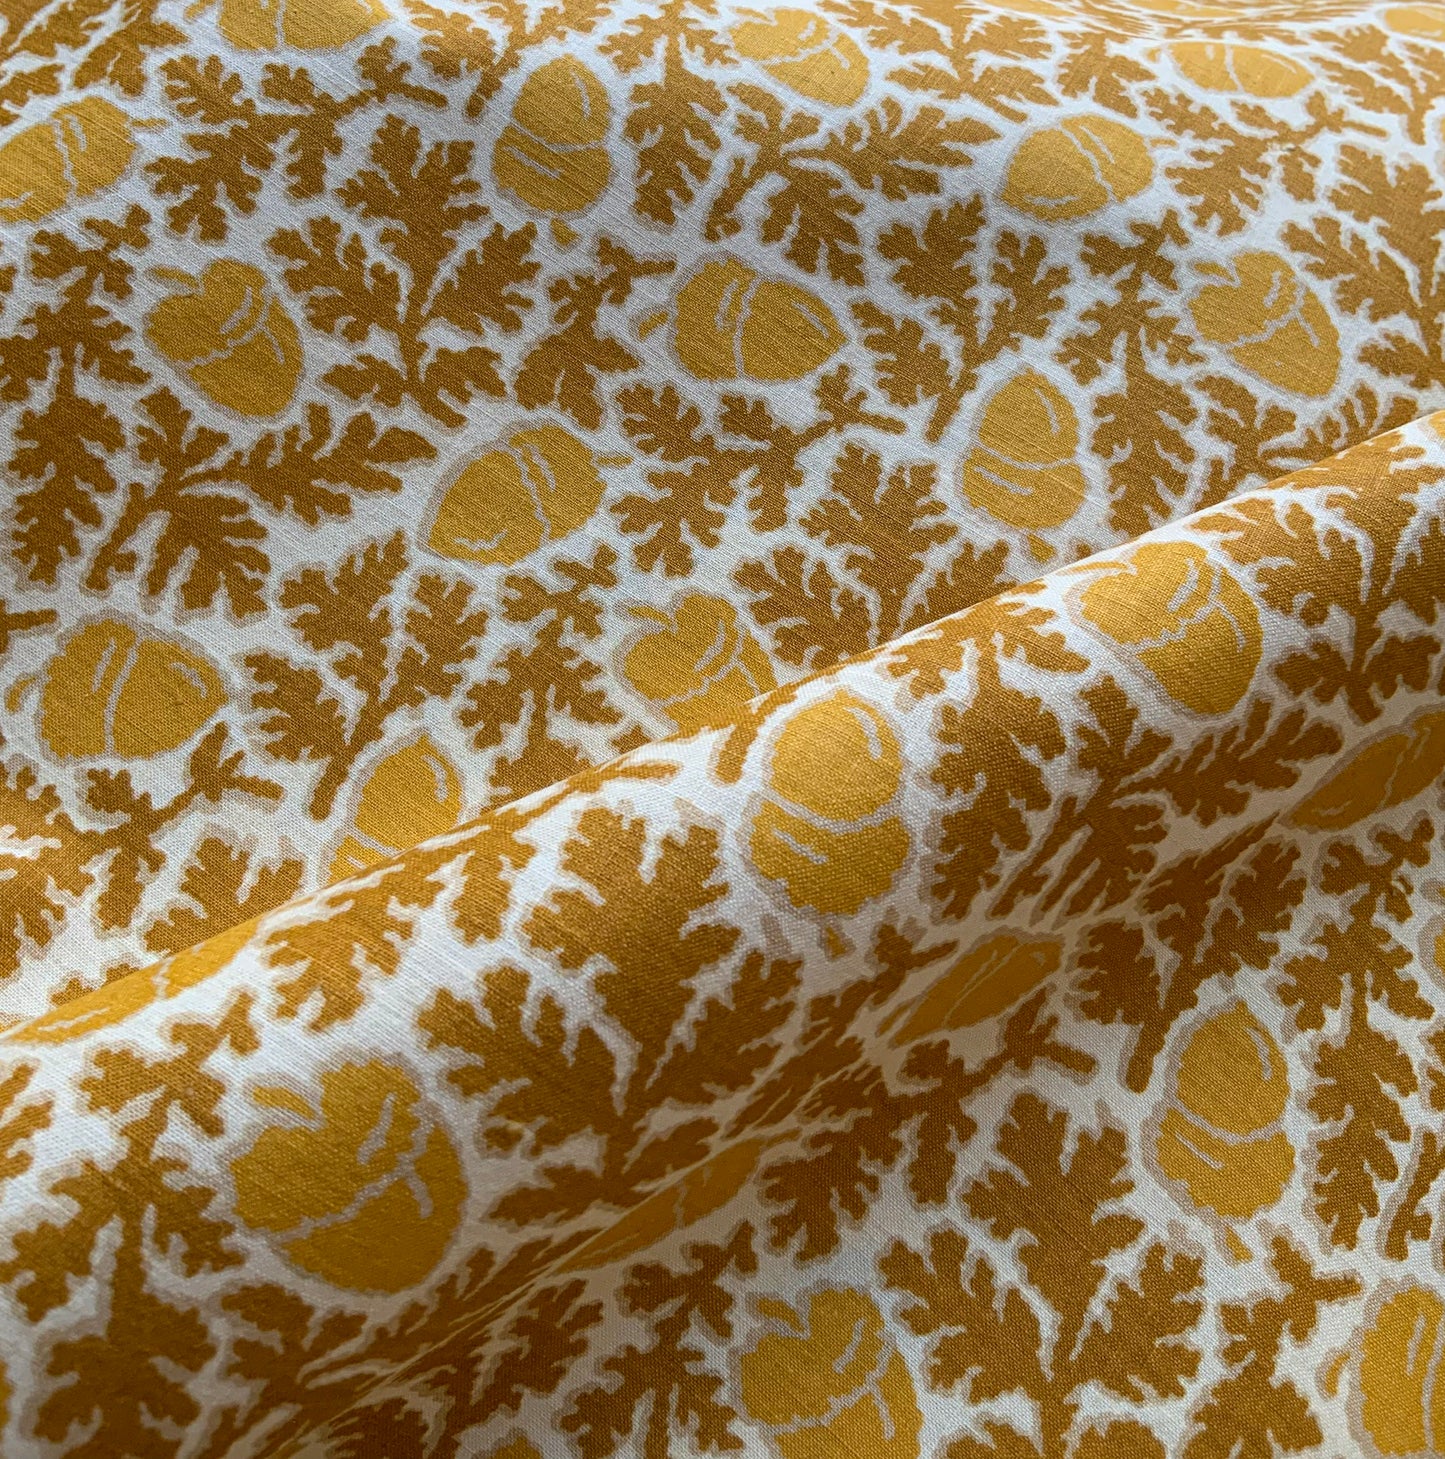 Tasha Tudor’s Original Dress Handprint in Yellow/Ochre